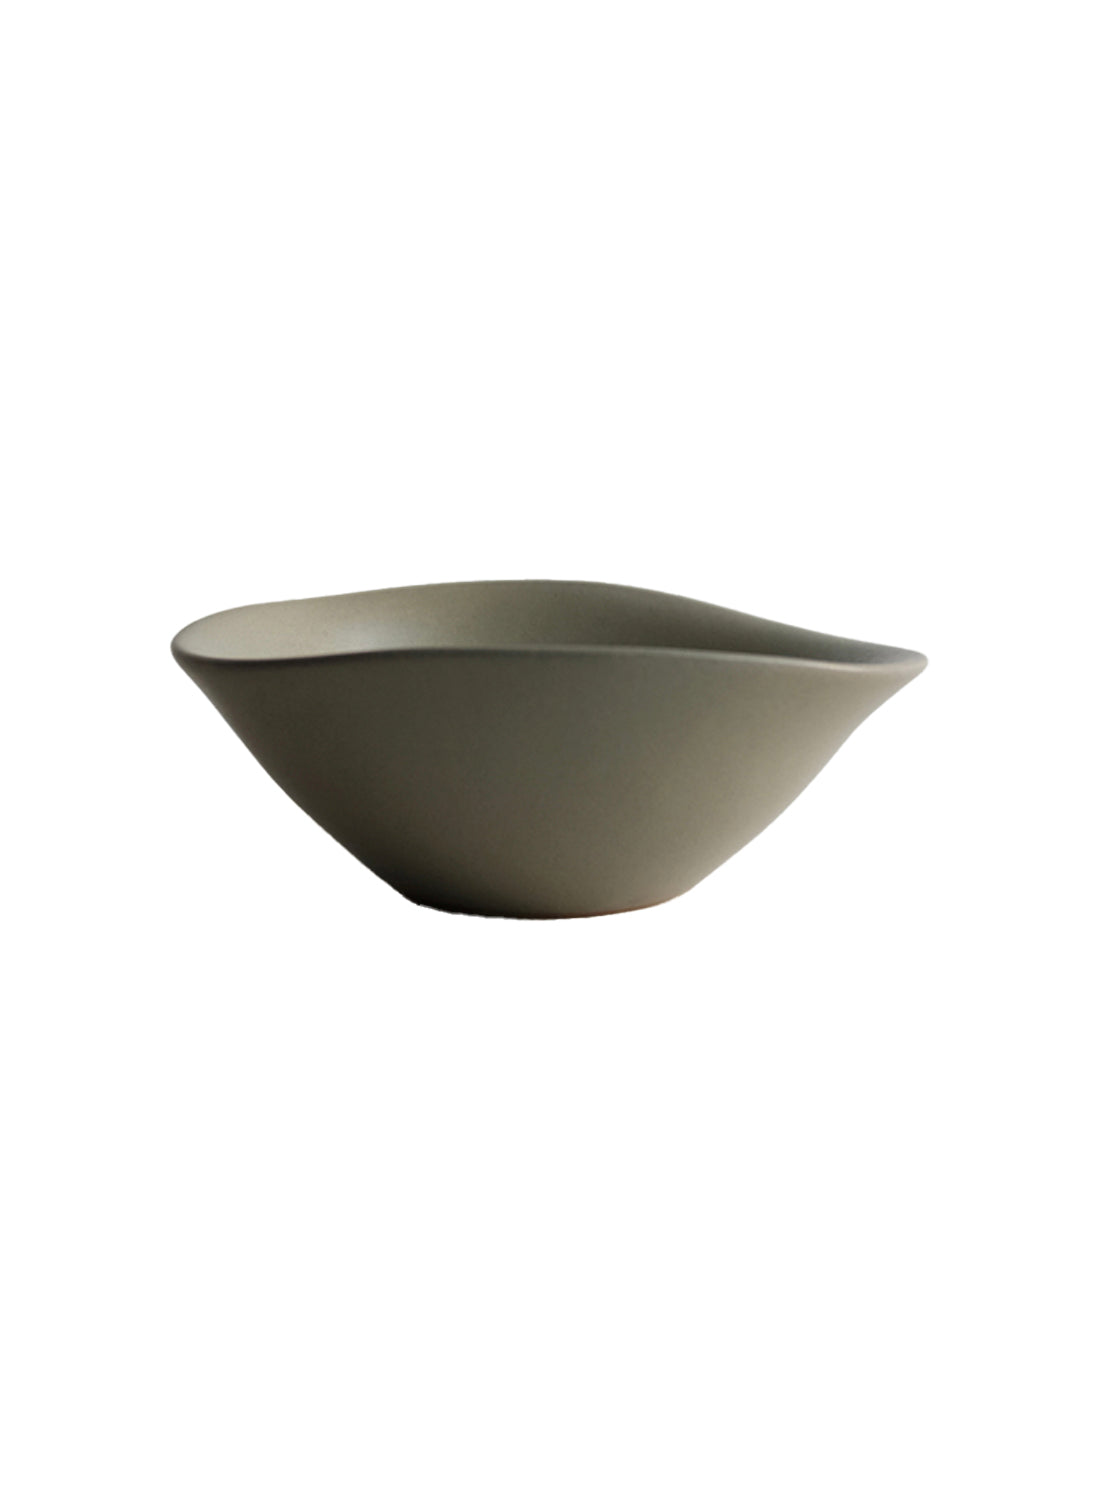 NR Ceramics Soup Bowl, forest green